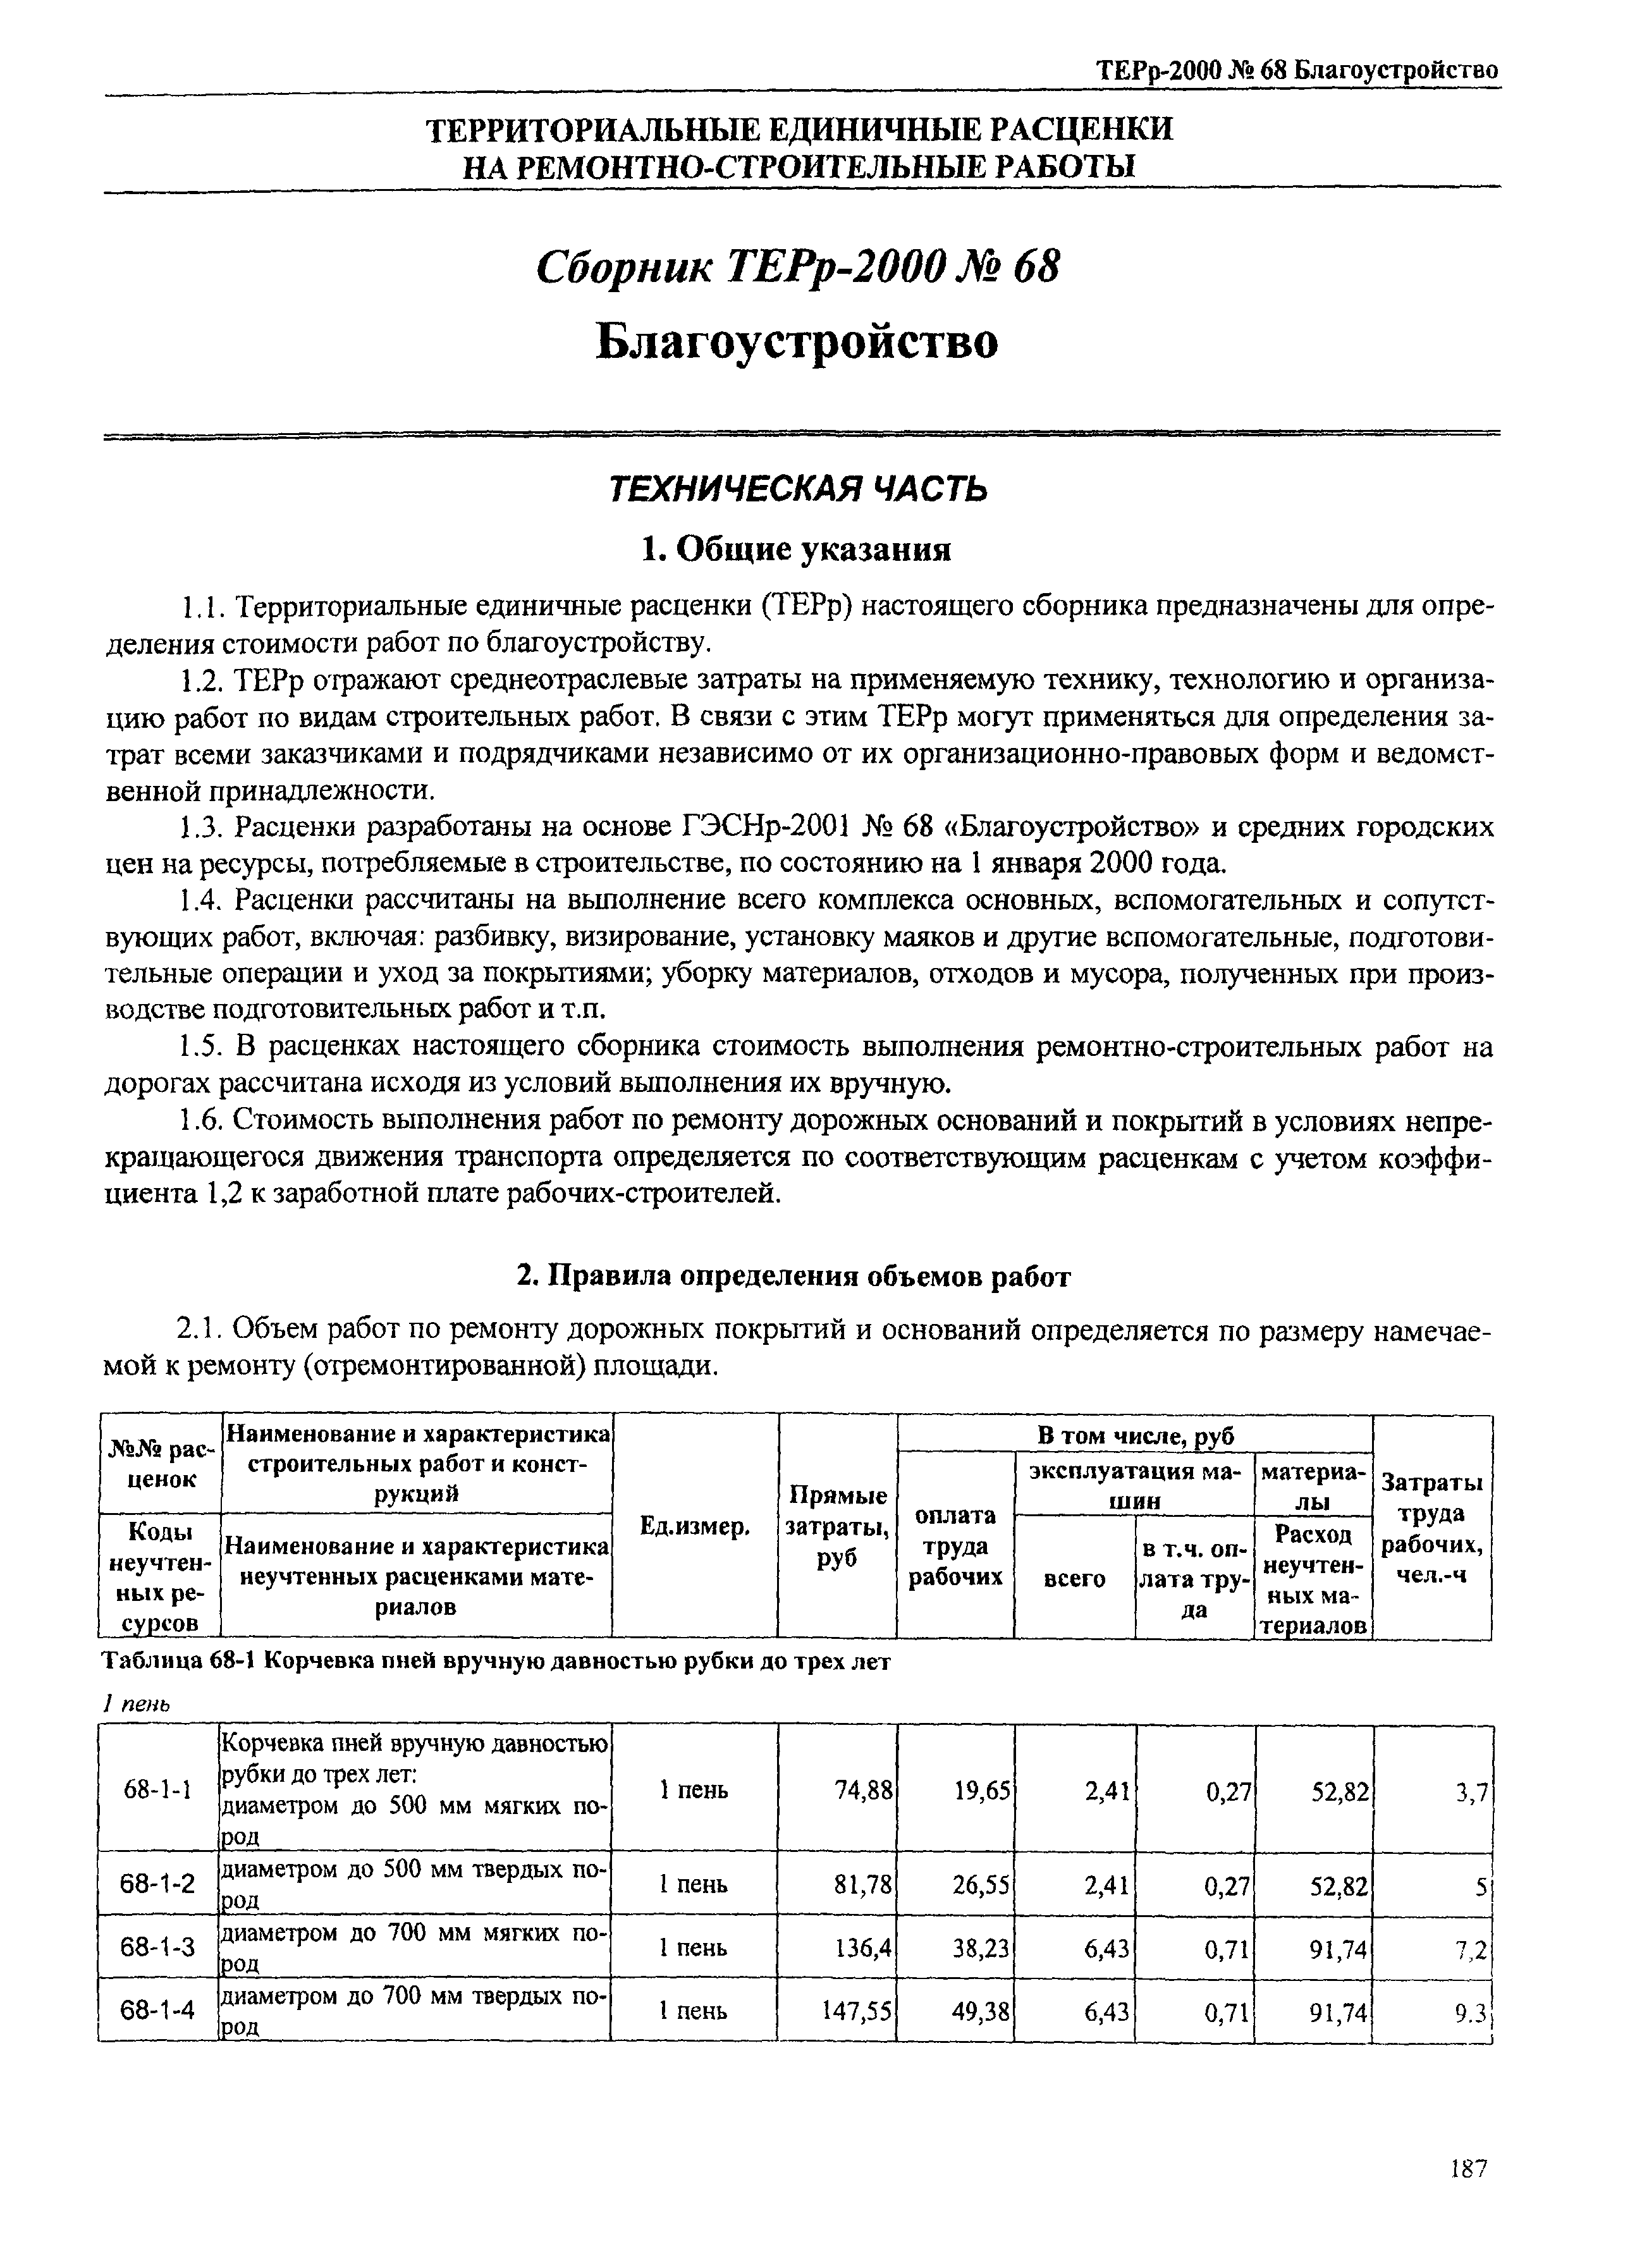 ТЕРр Омской области 2000-68